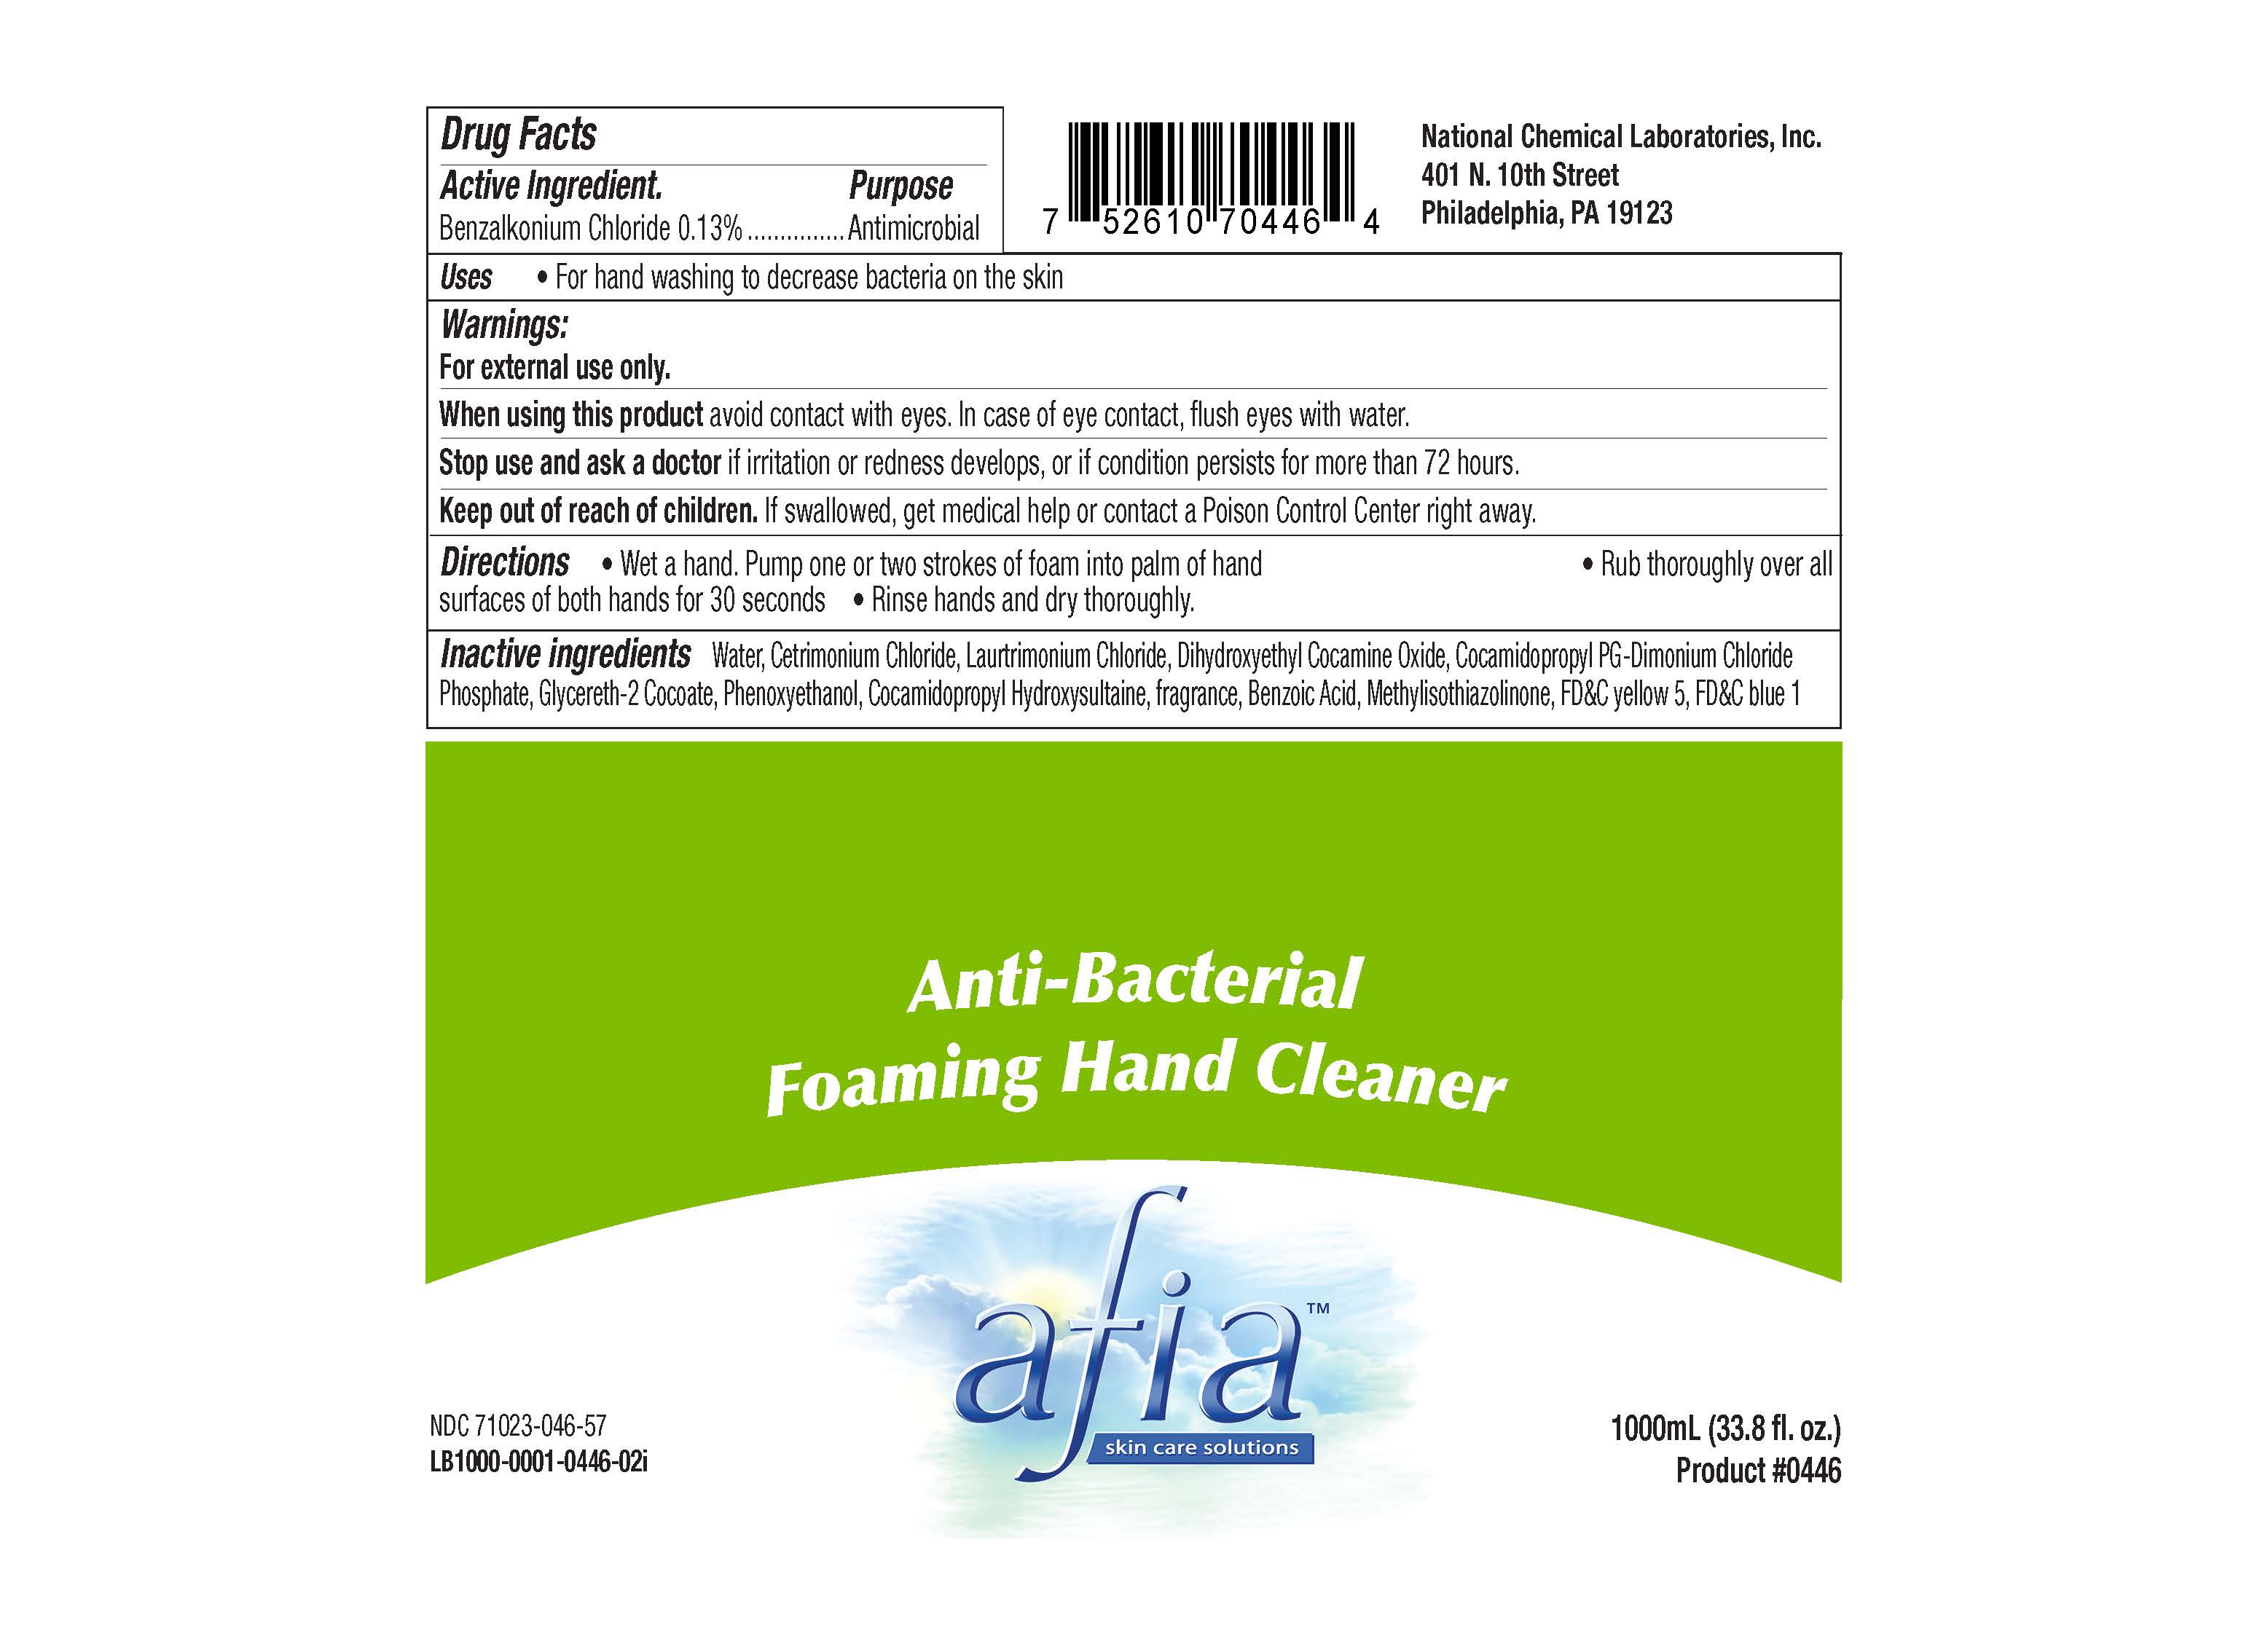 Afia Anti-Bacterial Foaming Hand Cleaner labelAfia Anti-Bacterial Foaming Hand Cleaner